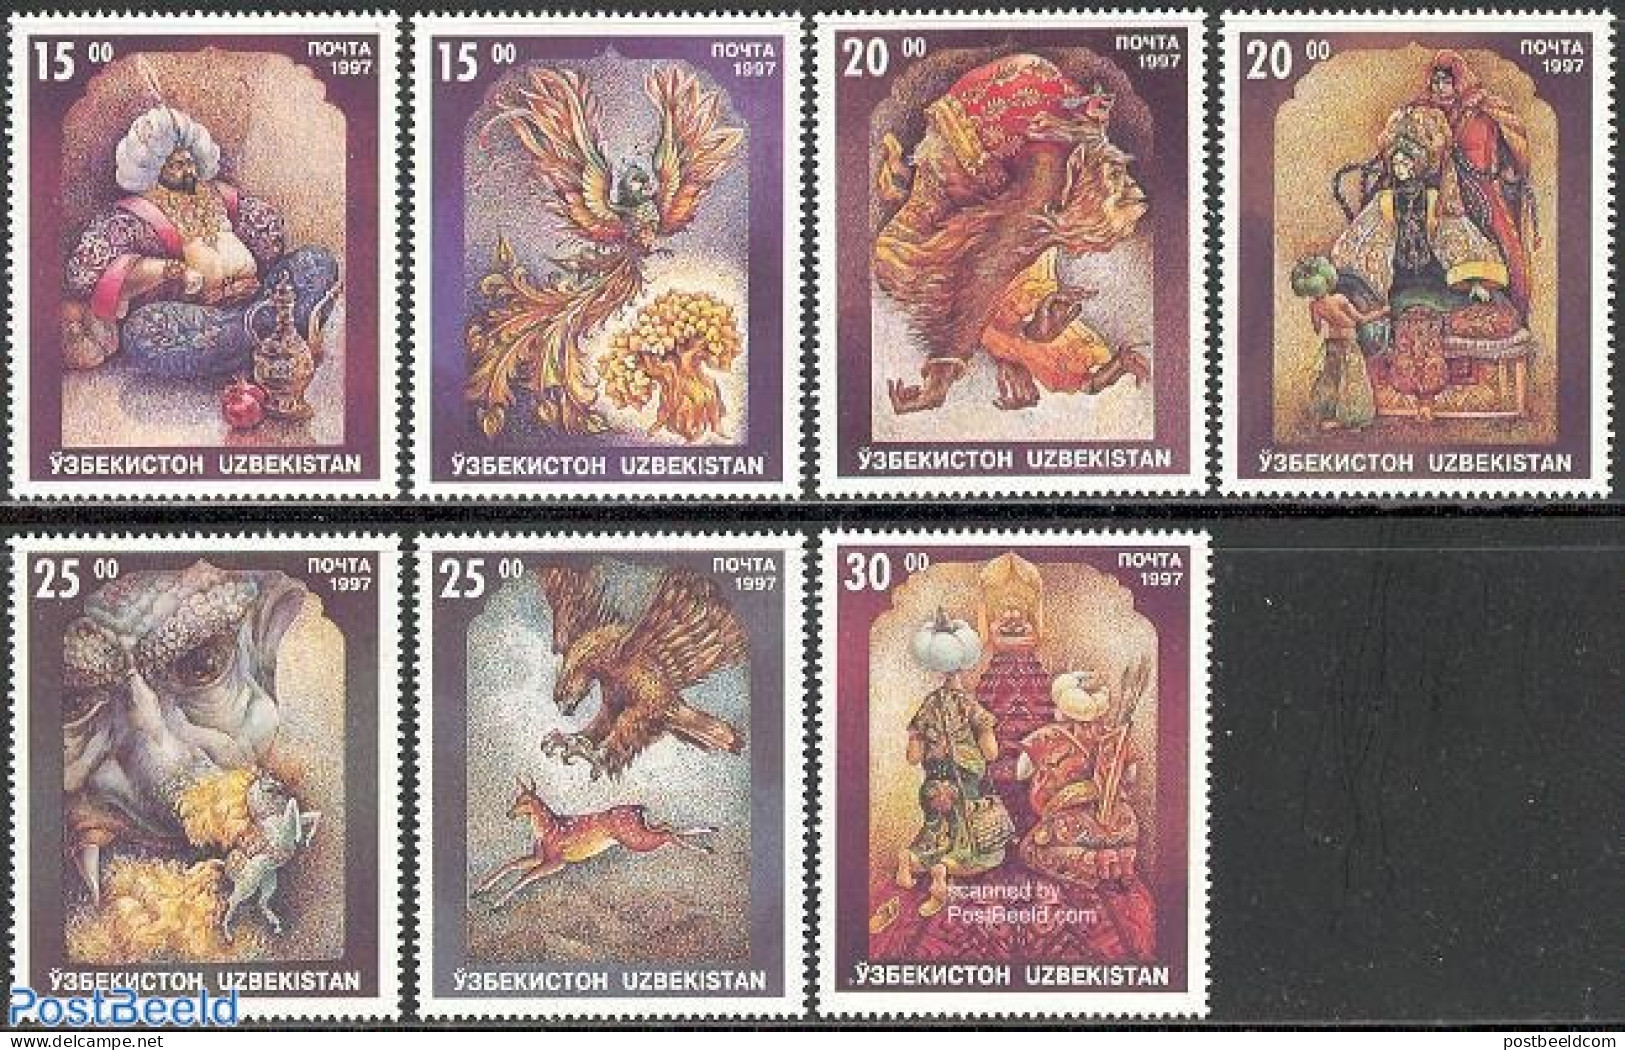 Uzbekistan 1997 National Fairy Tale 7v, Mint NH, Nature - Birds - Art - Fairytales - Science Fiction - Märchen, Sagen & Legenden